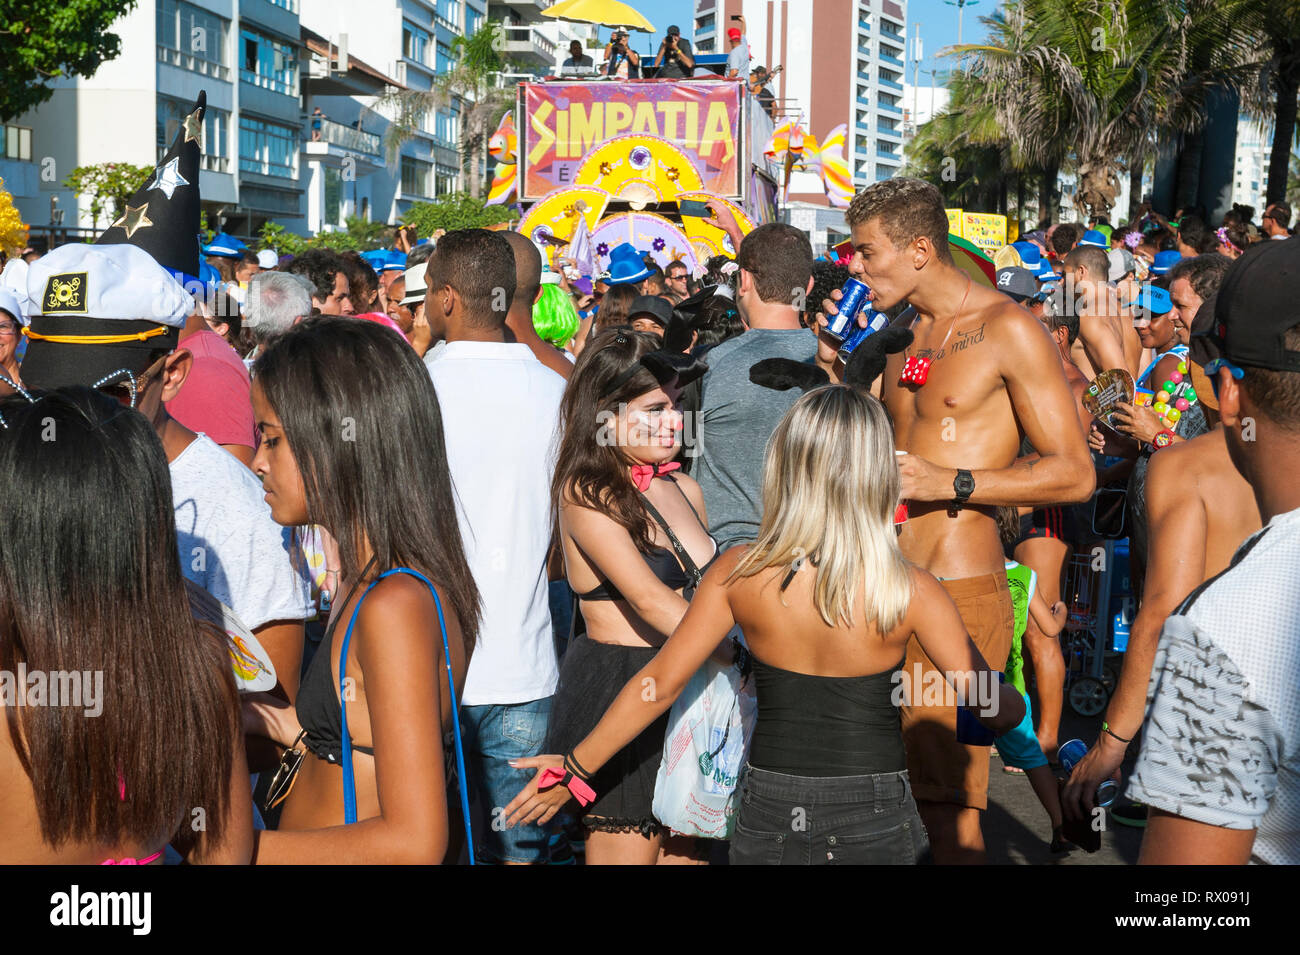 RIO DE JANEIRO - FEBRUARY 18, 2017: The iconic Simpatia é Quase Amore (Sympathy is Almost Love) banda Carnival street party in Ipanema draws crowds. Stock Photo